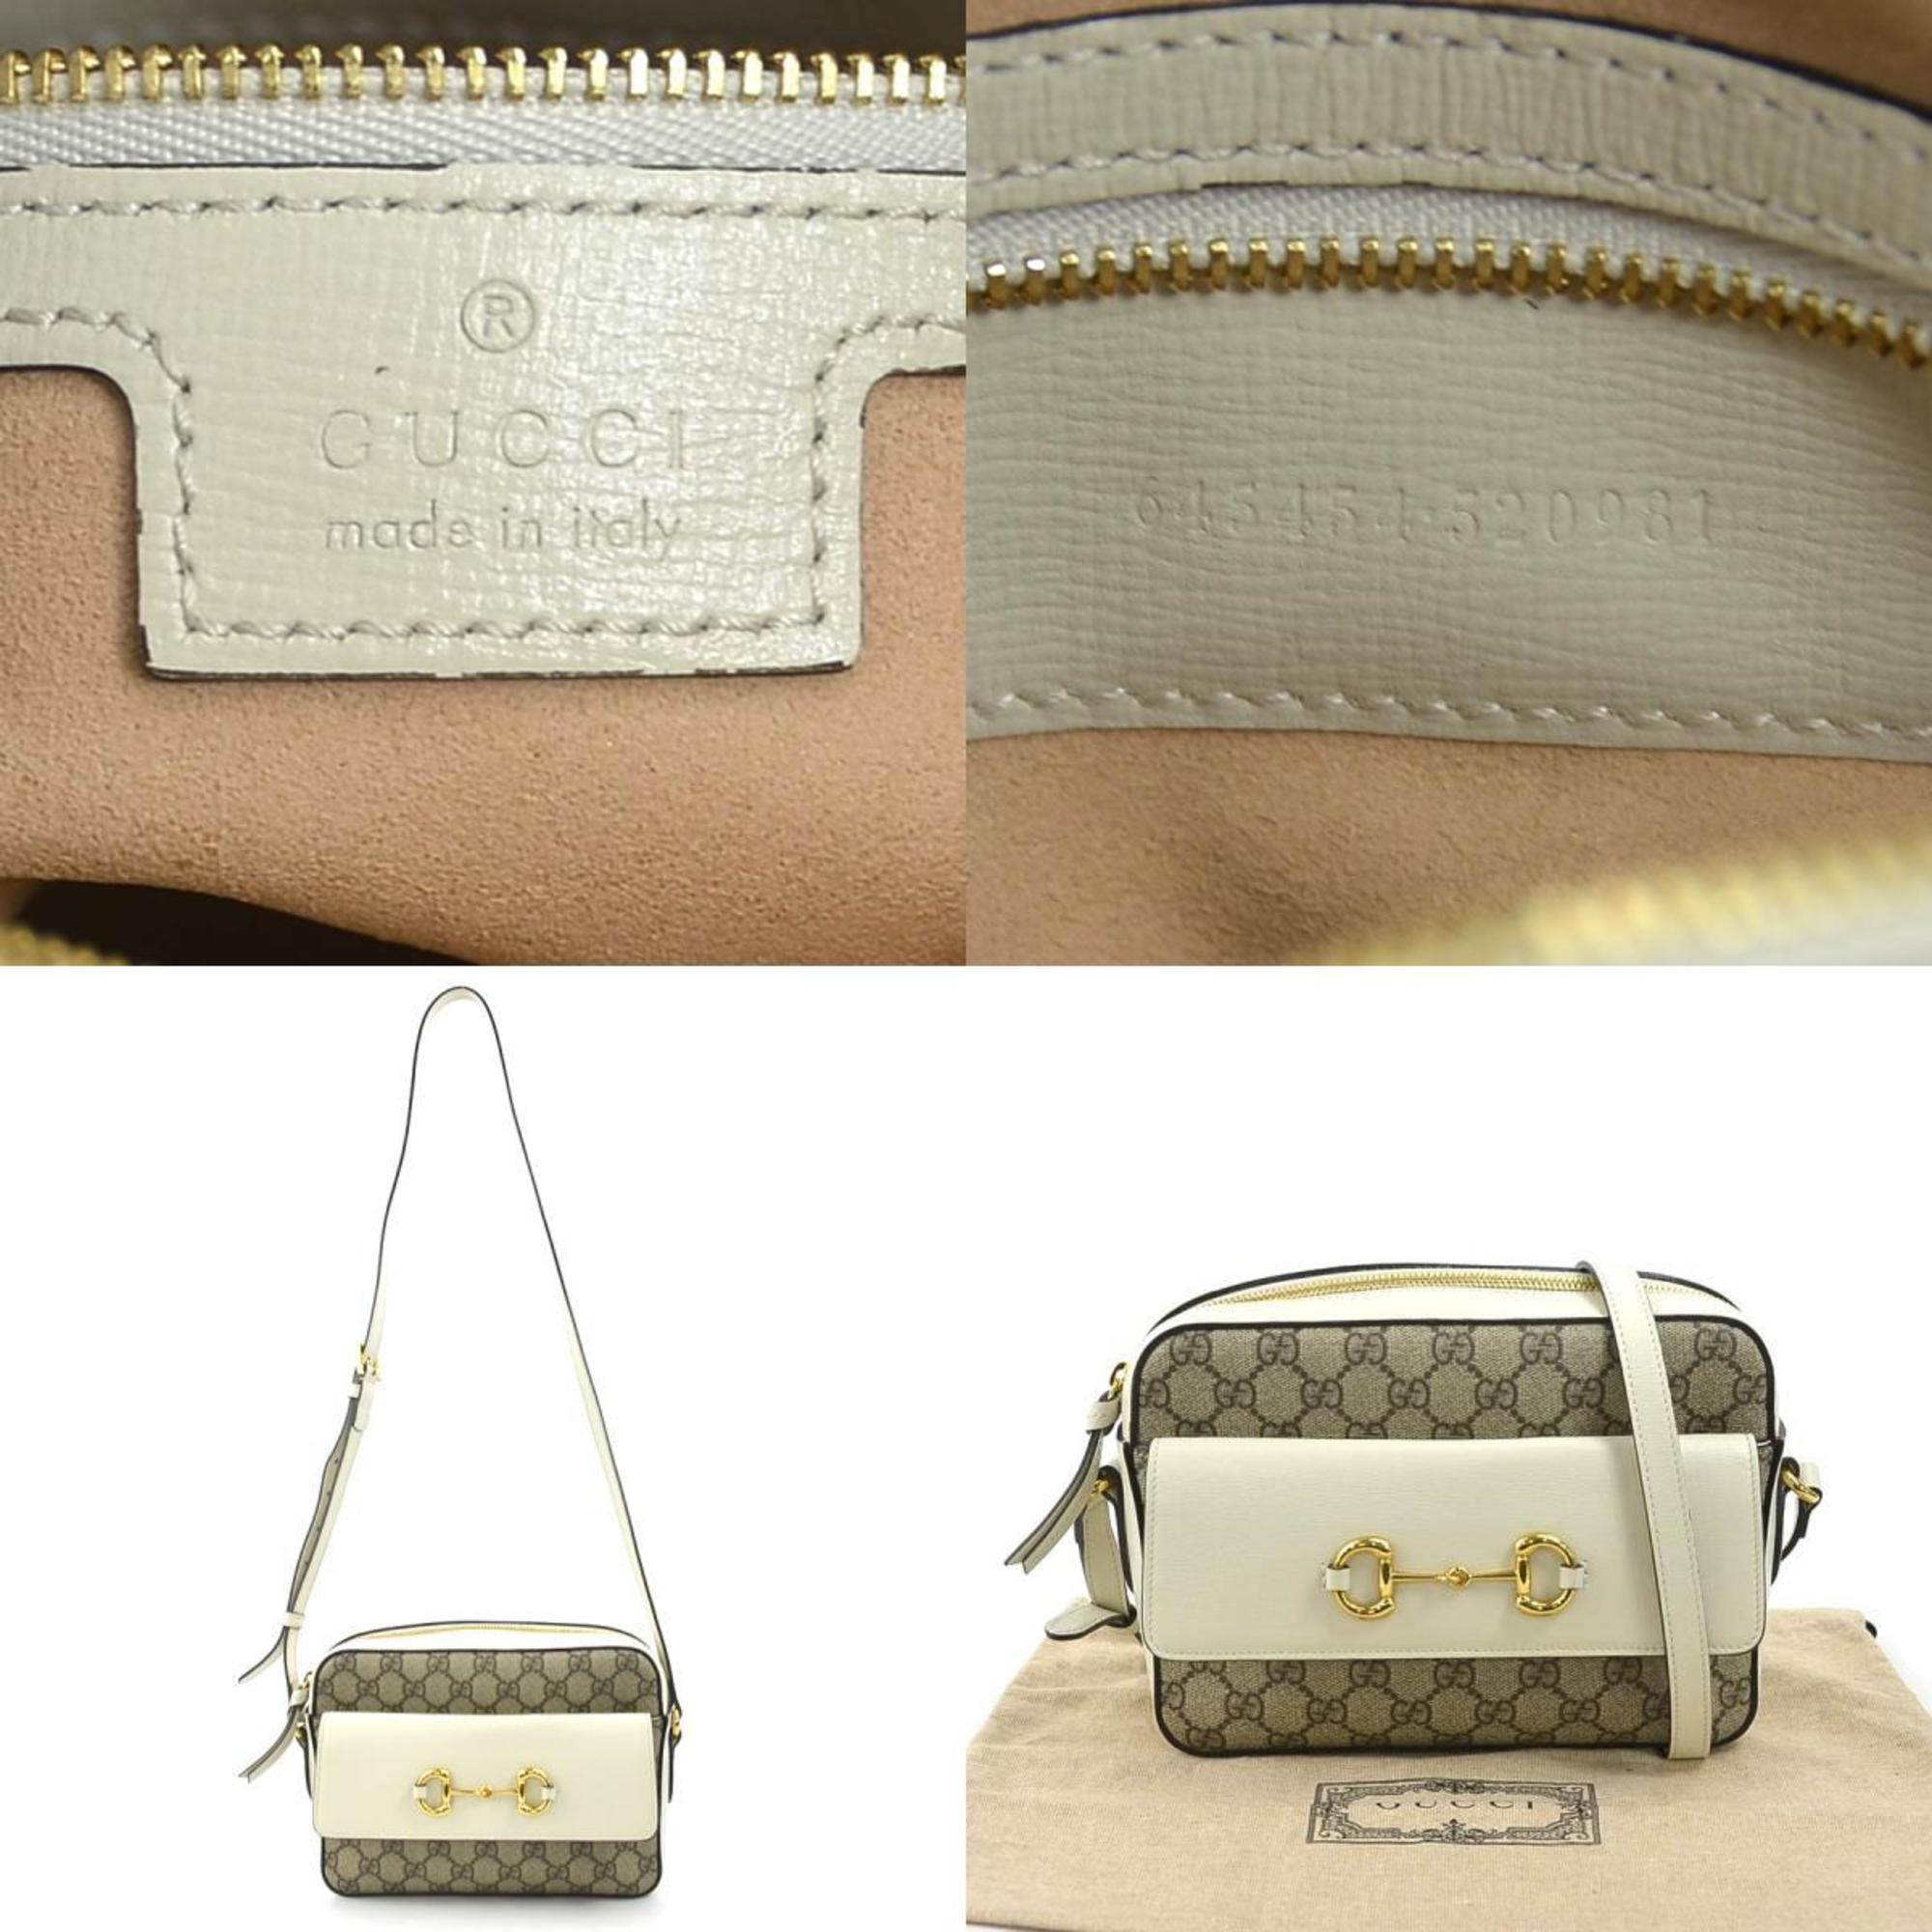 GUCCI Crossbody Shoulder Bag GG Supreme PVC/Leather Beige/White Gold Women's 645454